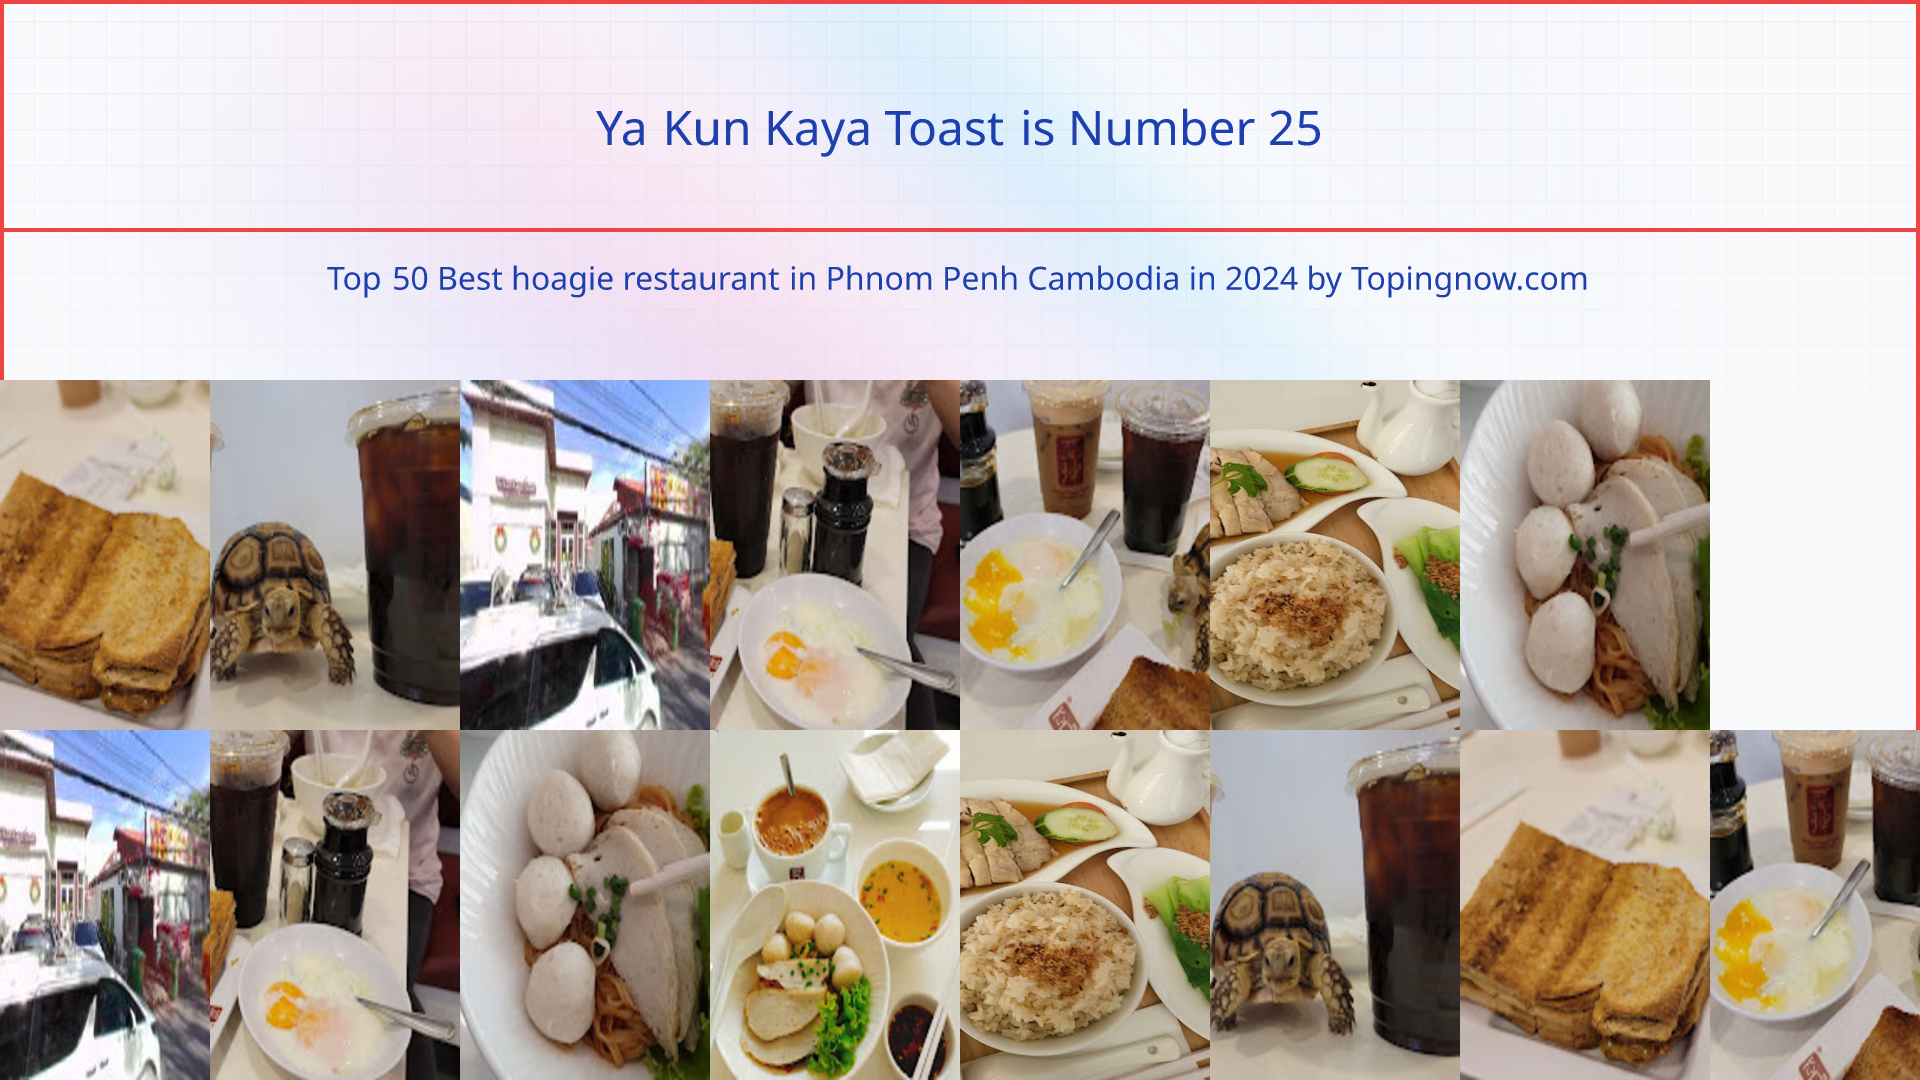 Ya Kun Kaya Toast: Top 50 Best hoagie restaurant in Phnom Penh Cambodia in 2024